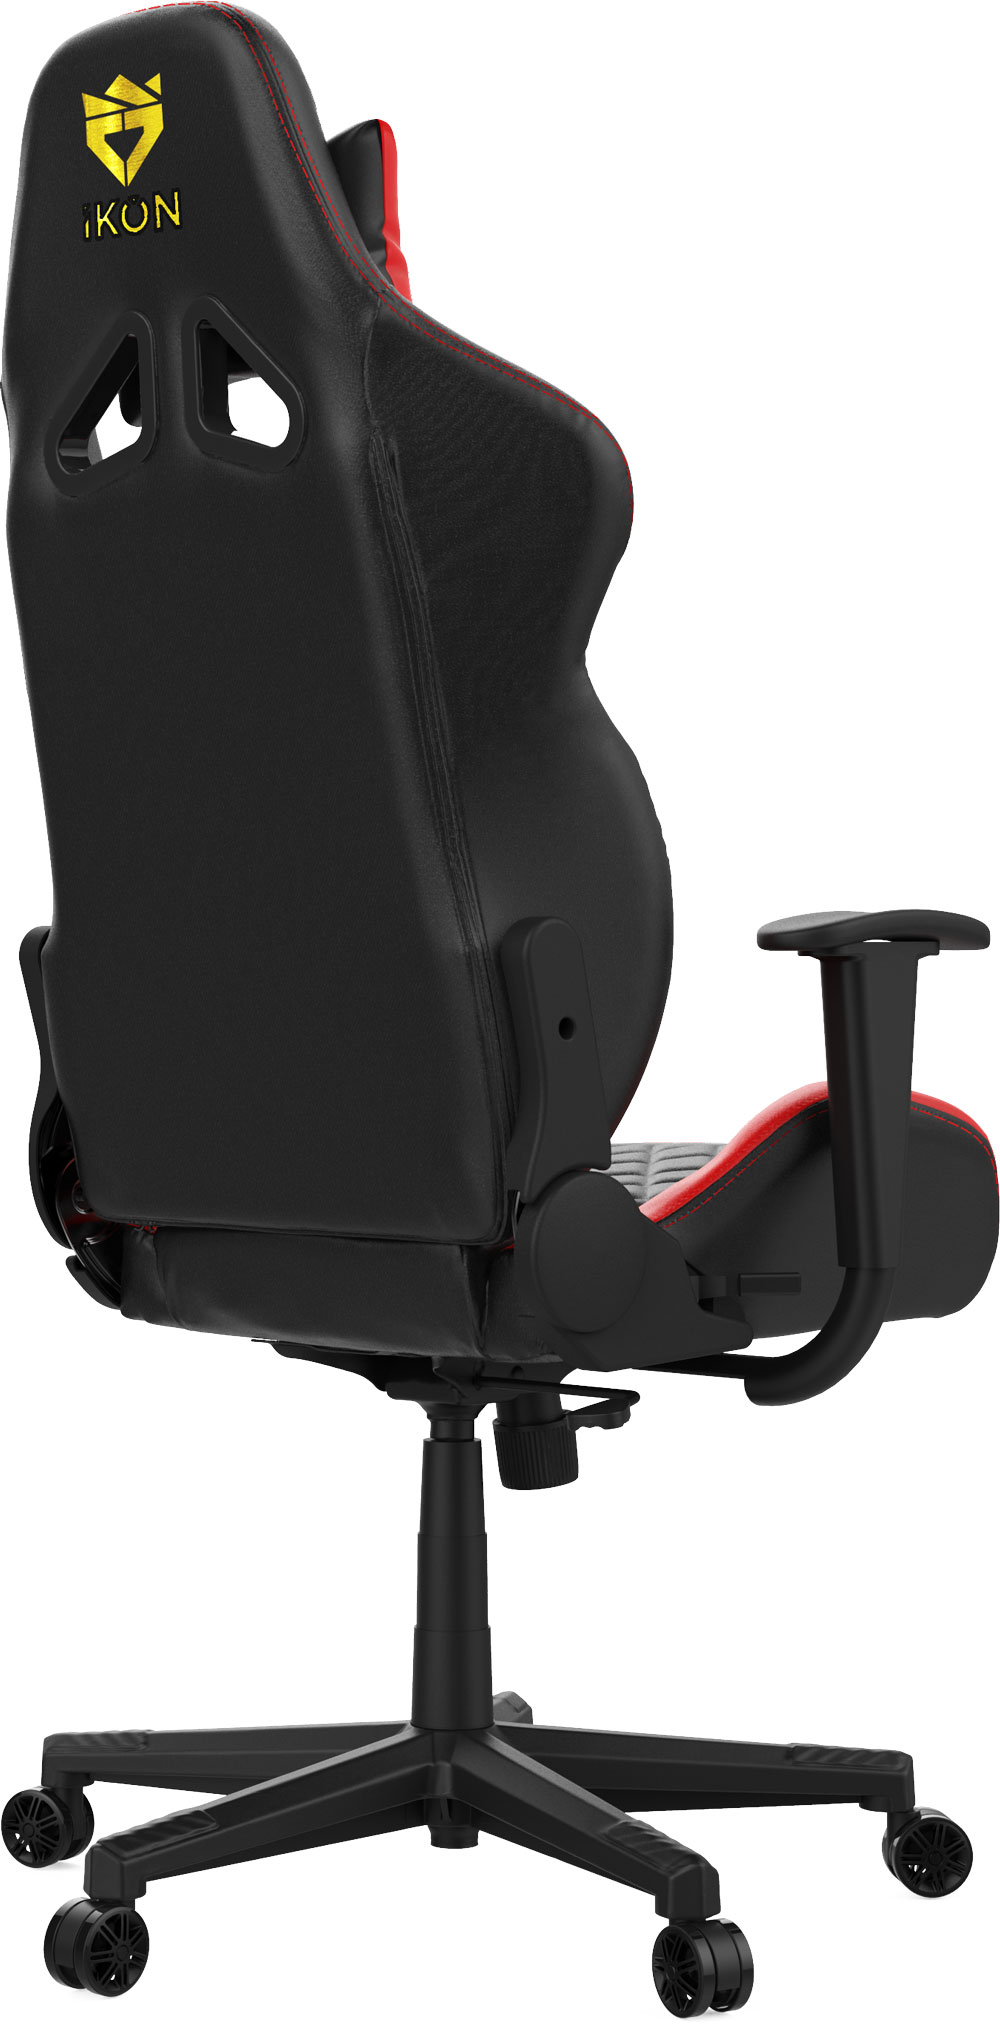 Evetech IKon-Shift-300 Gaming Chair - Black/Red